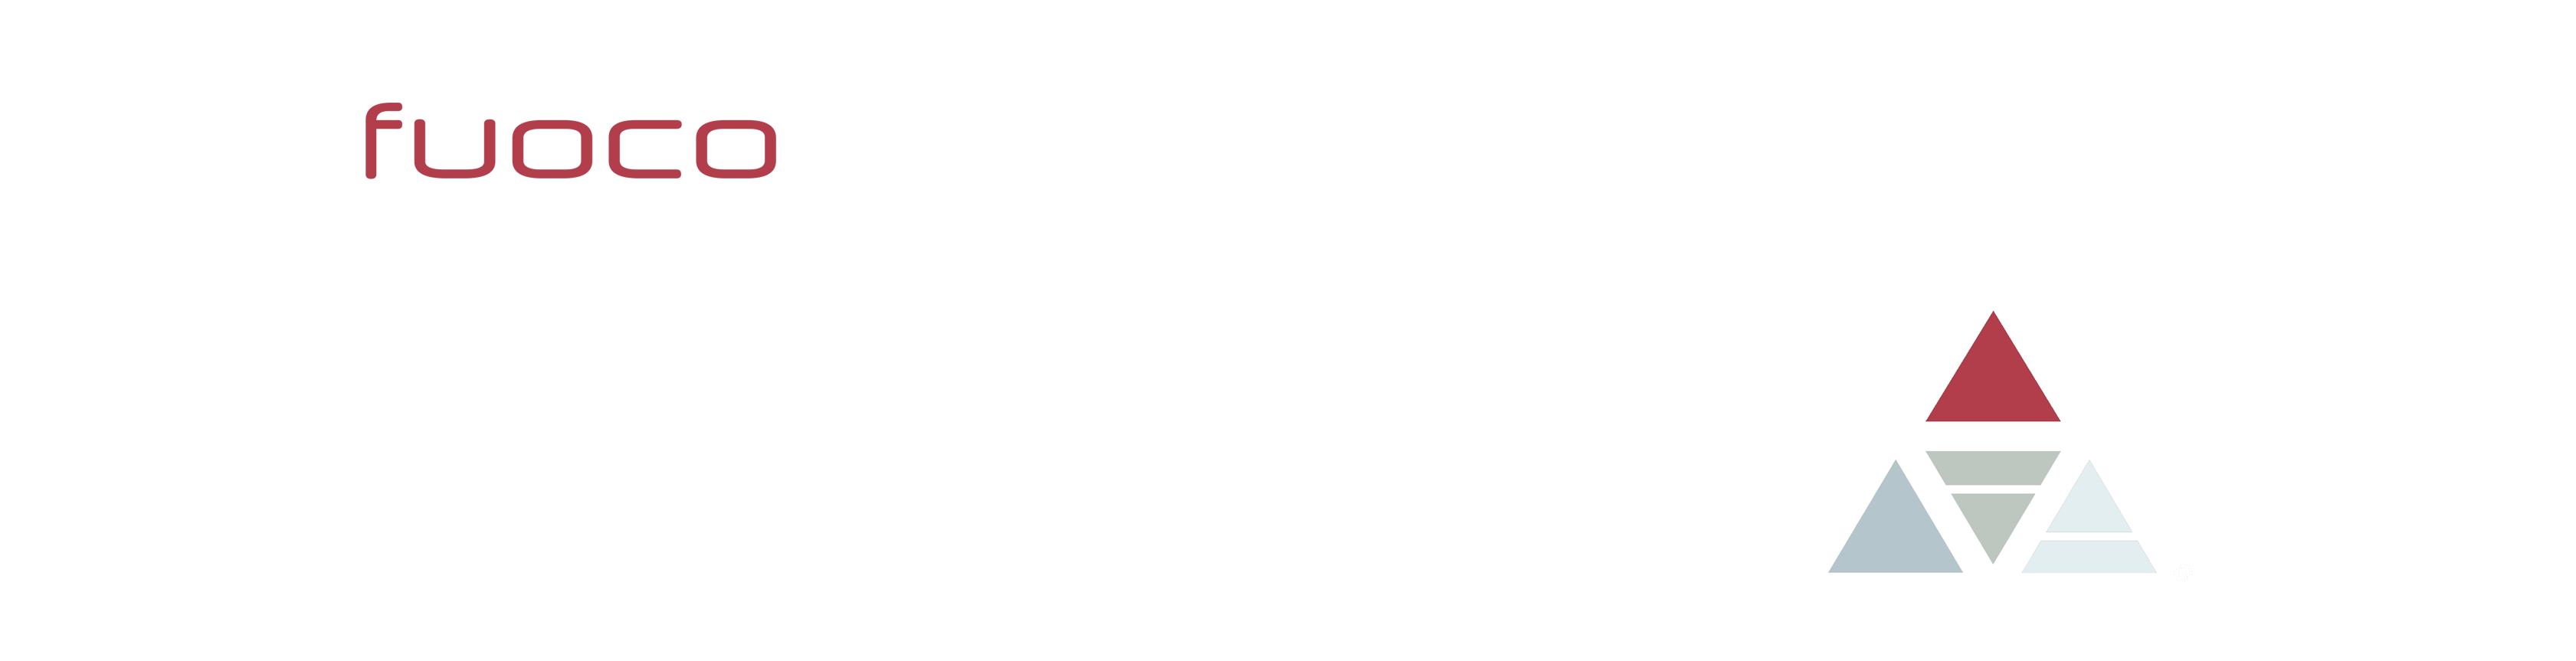 fgr-system-fuoco